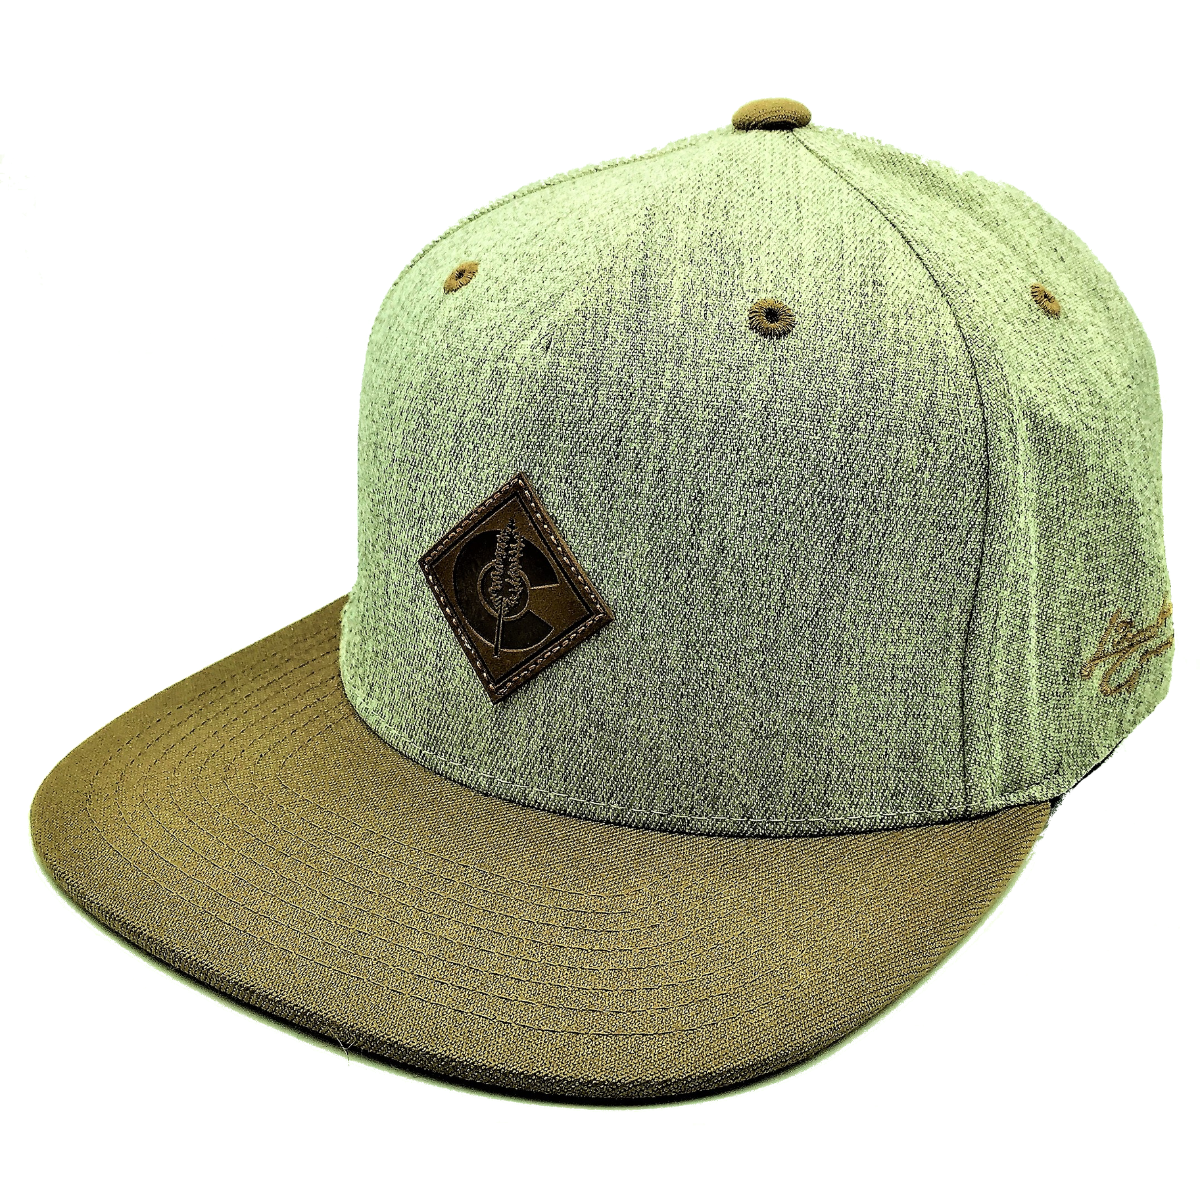 Limber Grove SnapBack Hats